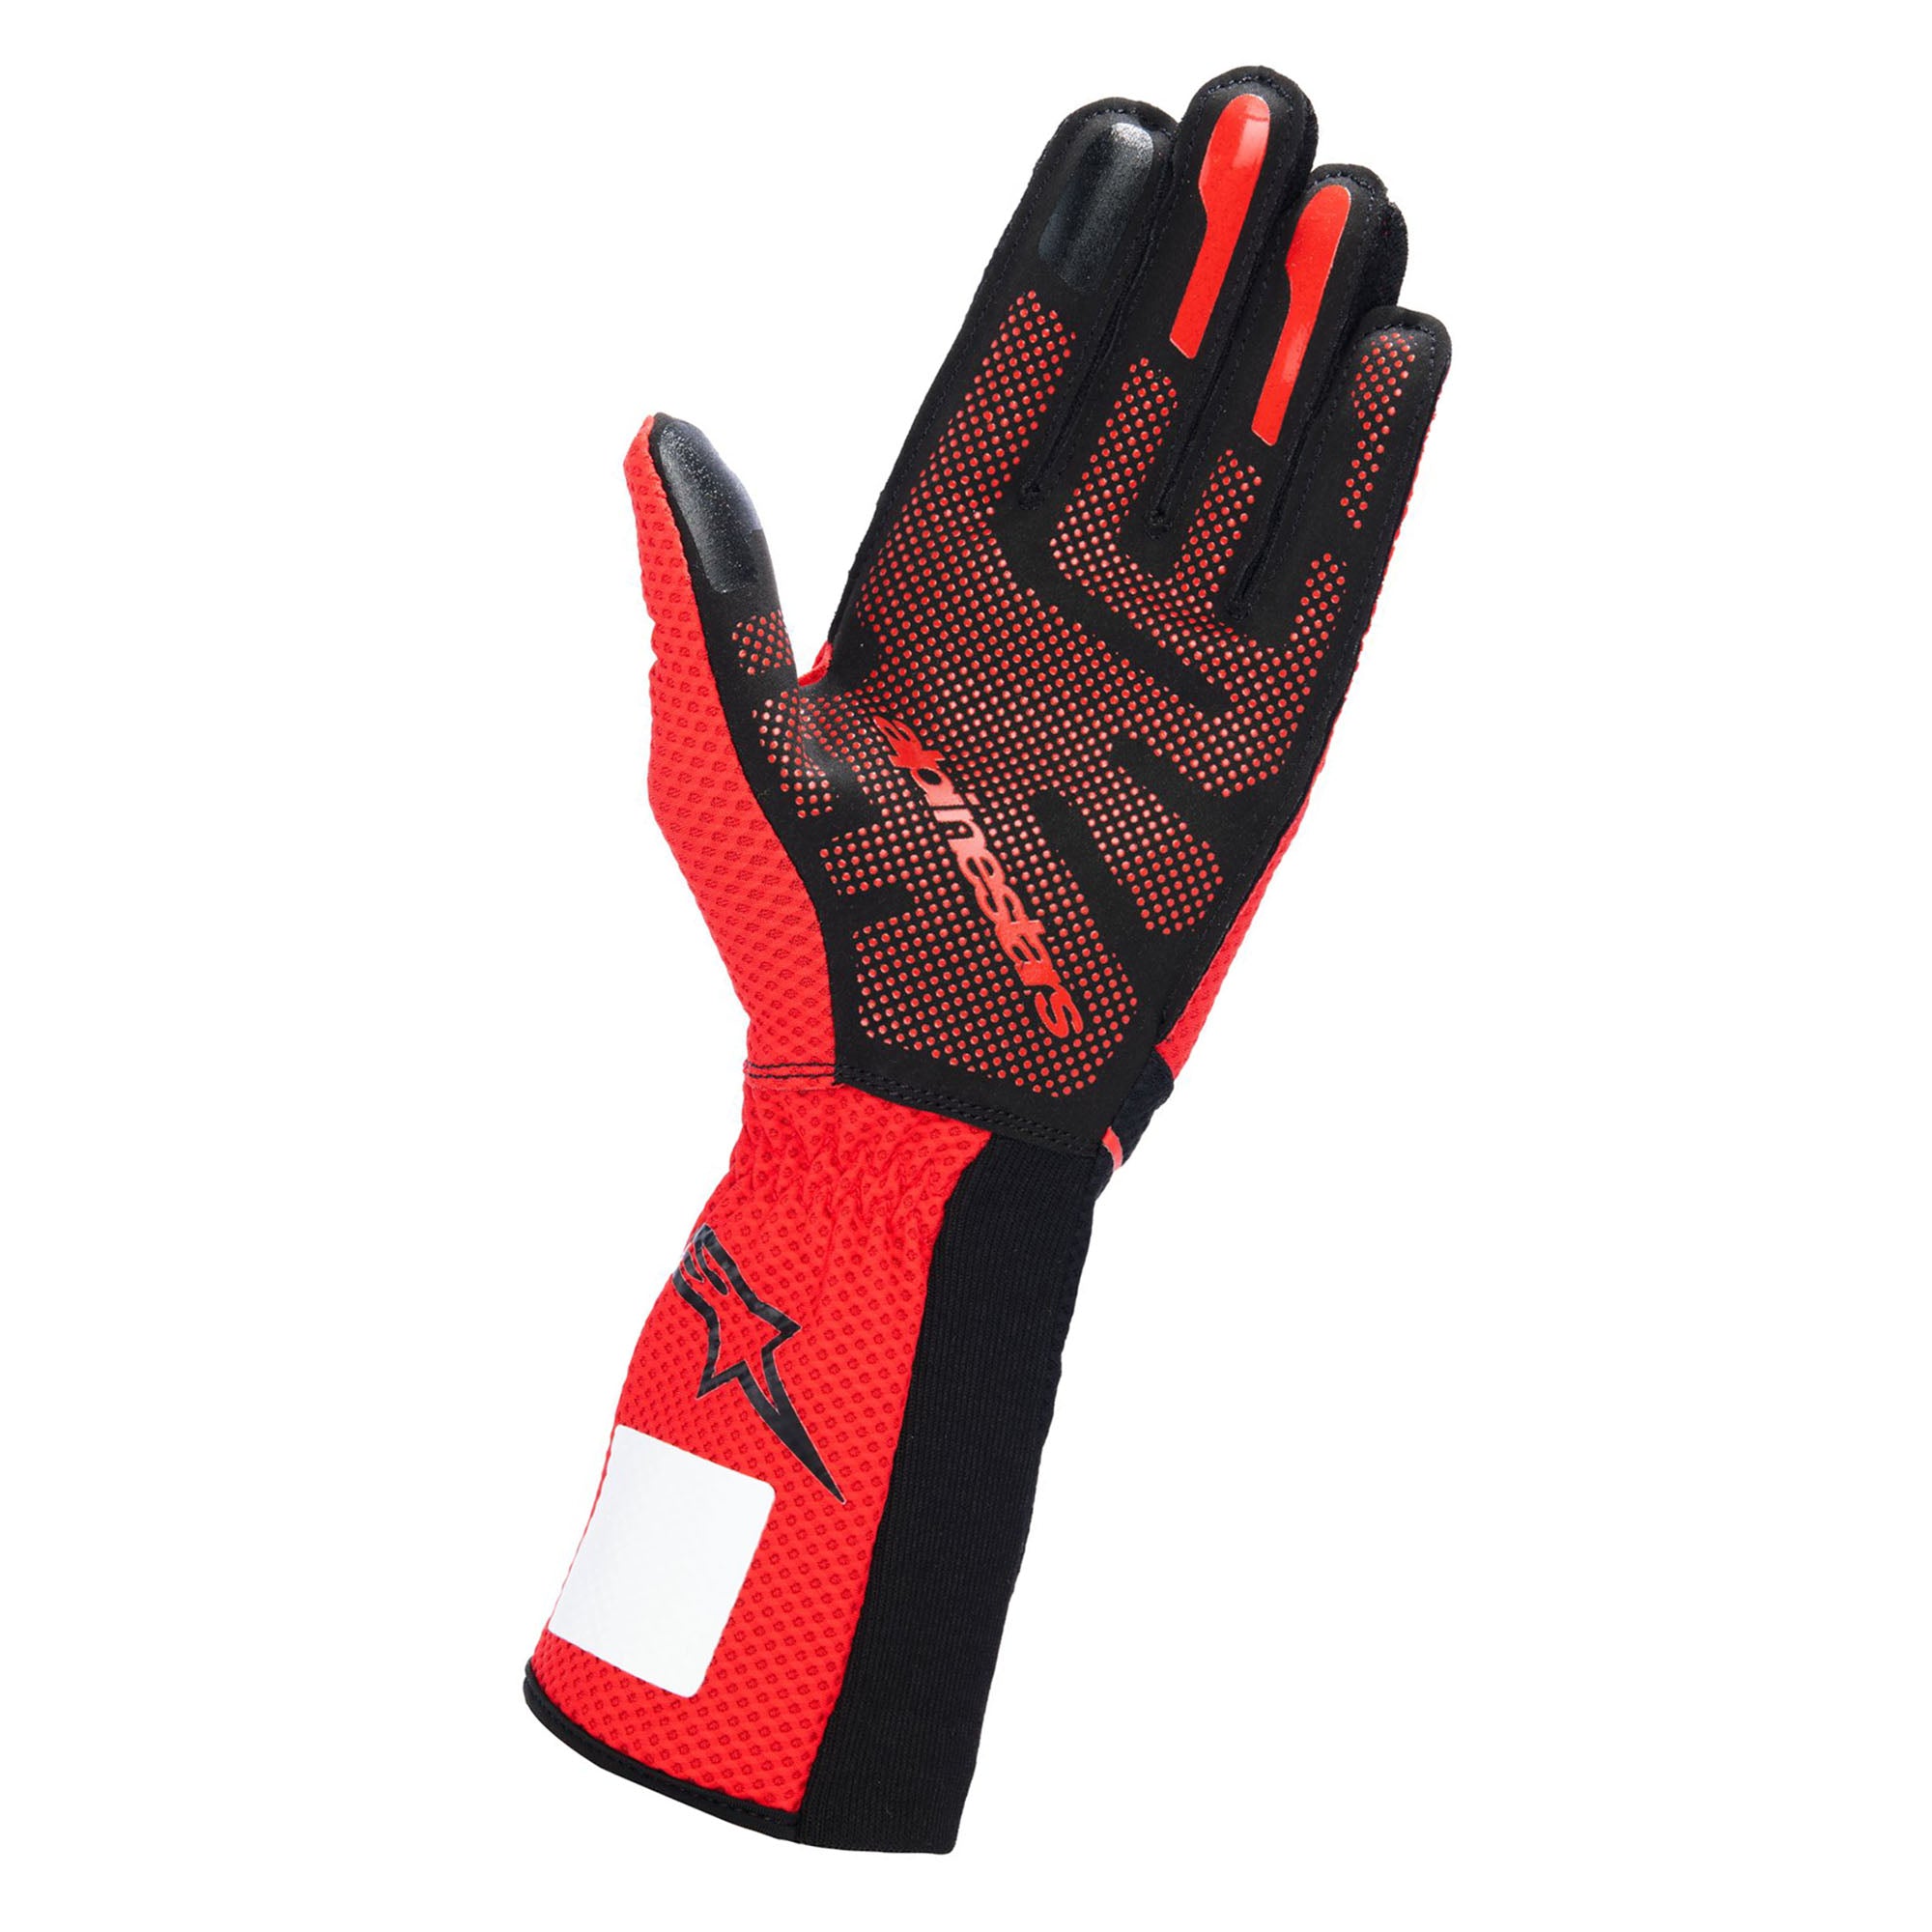 Alpinestars Tech-1 KX v4 Karting Gloves